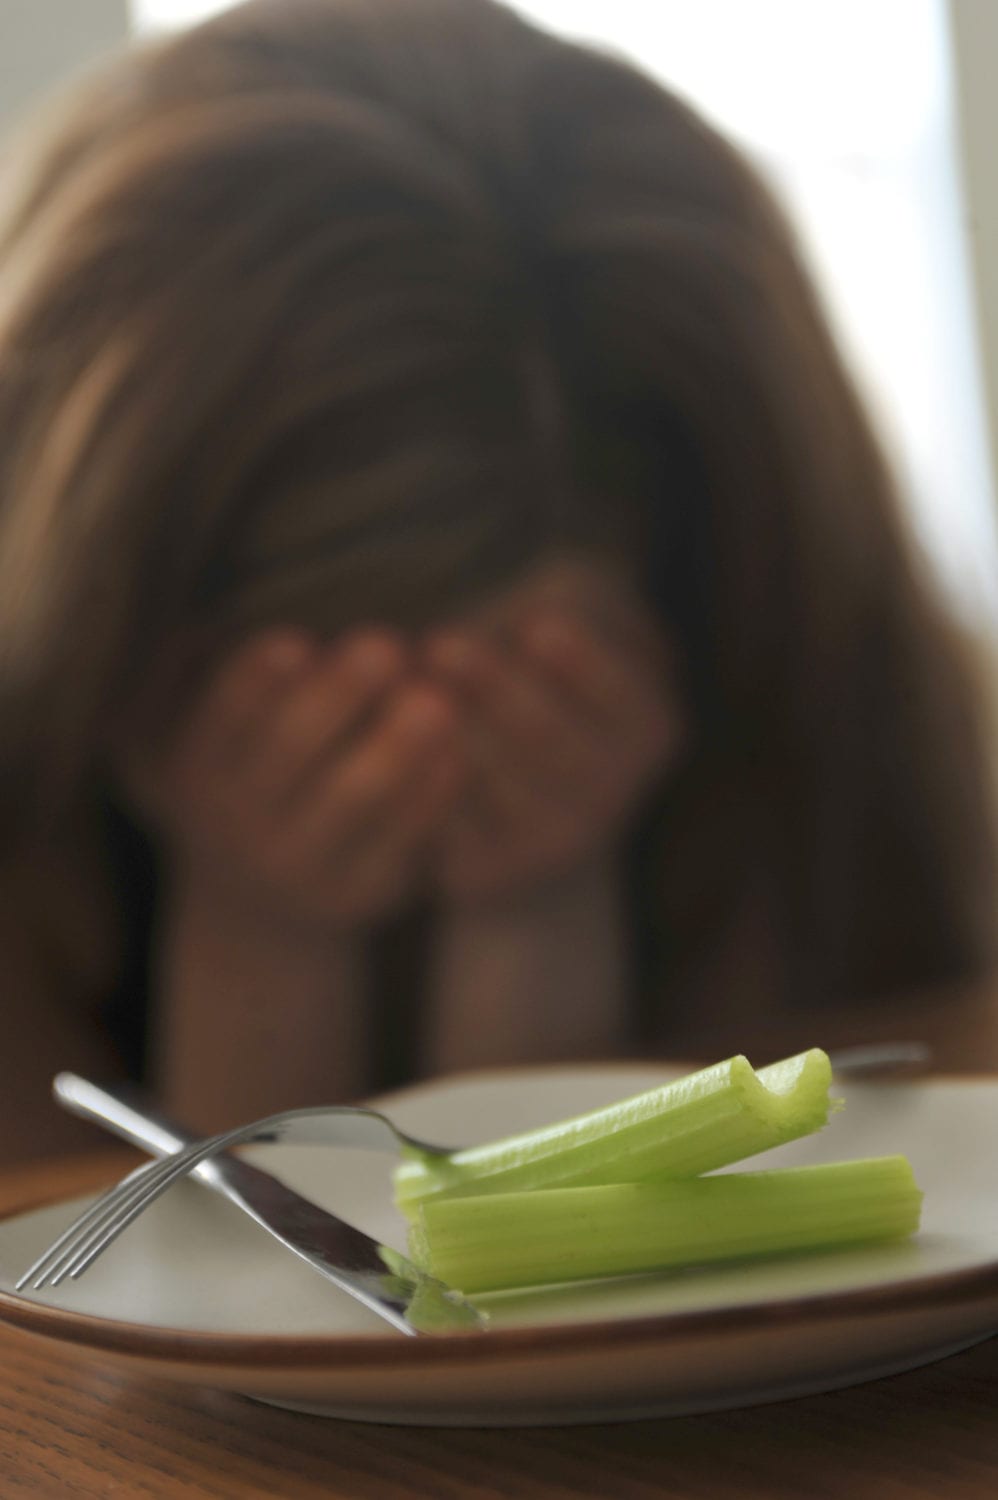 Eating Disorder Awareness Week: Eating disorders by the numbers